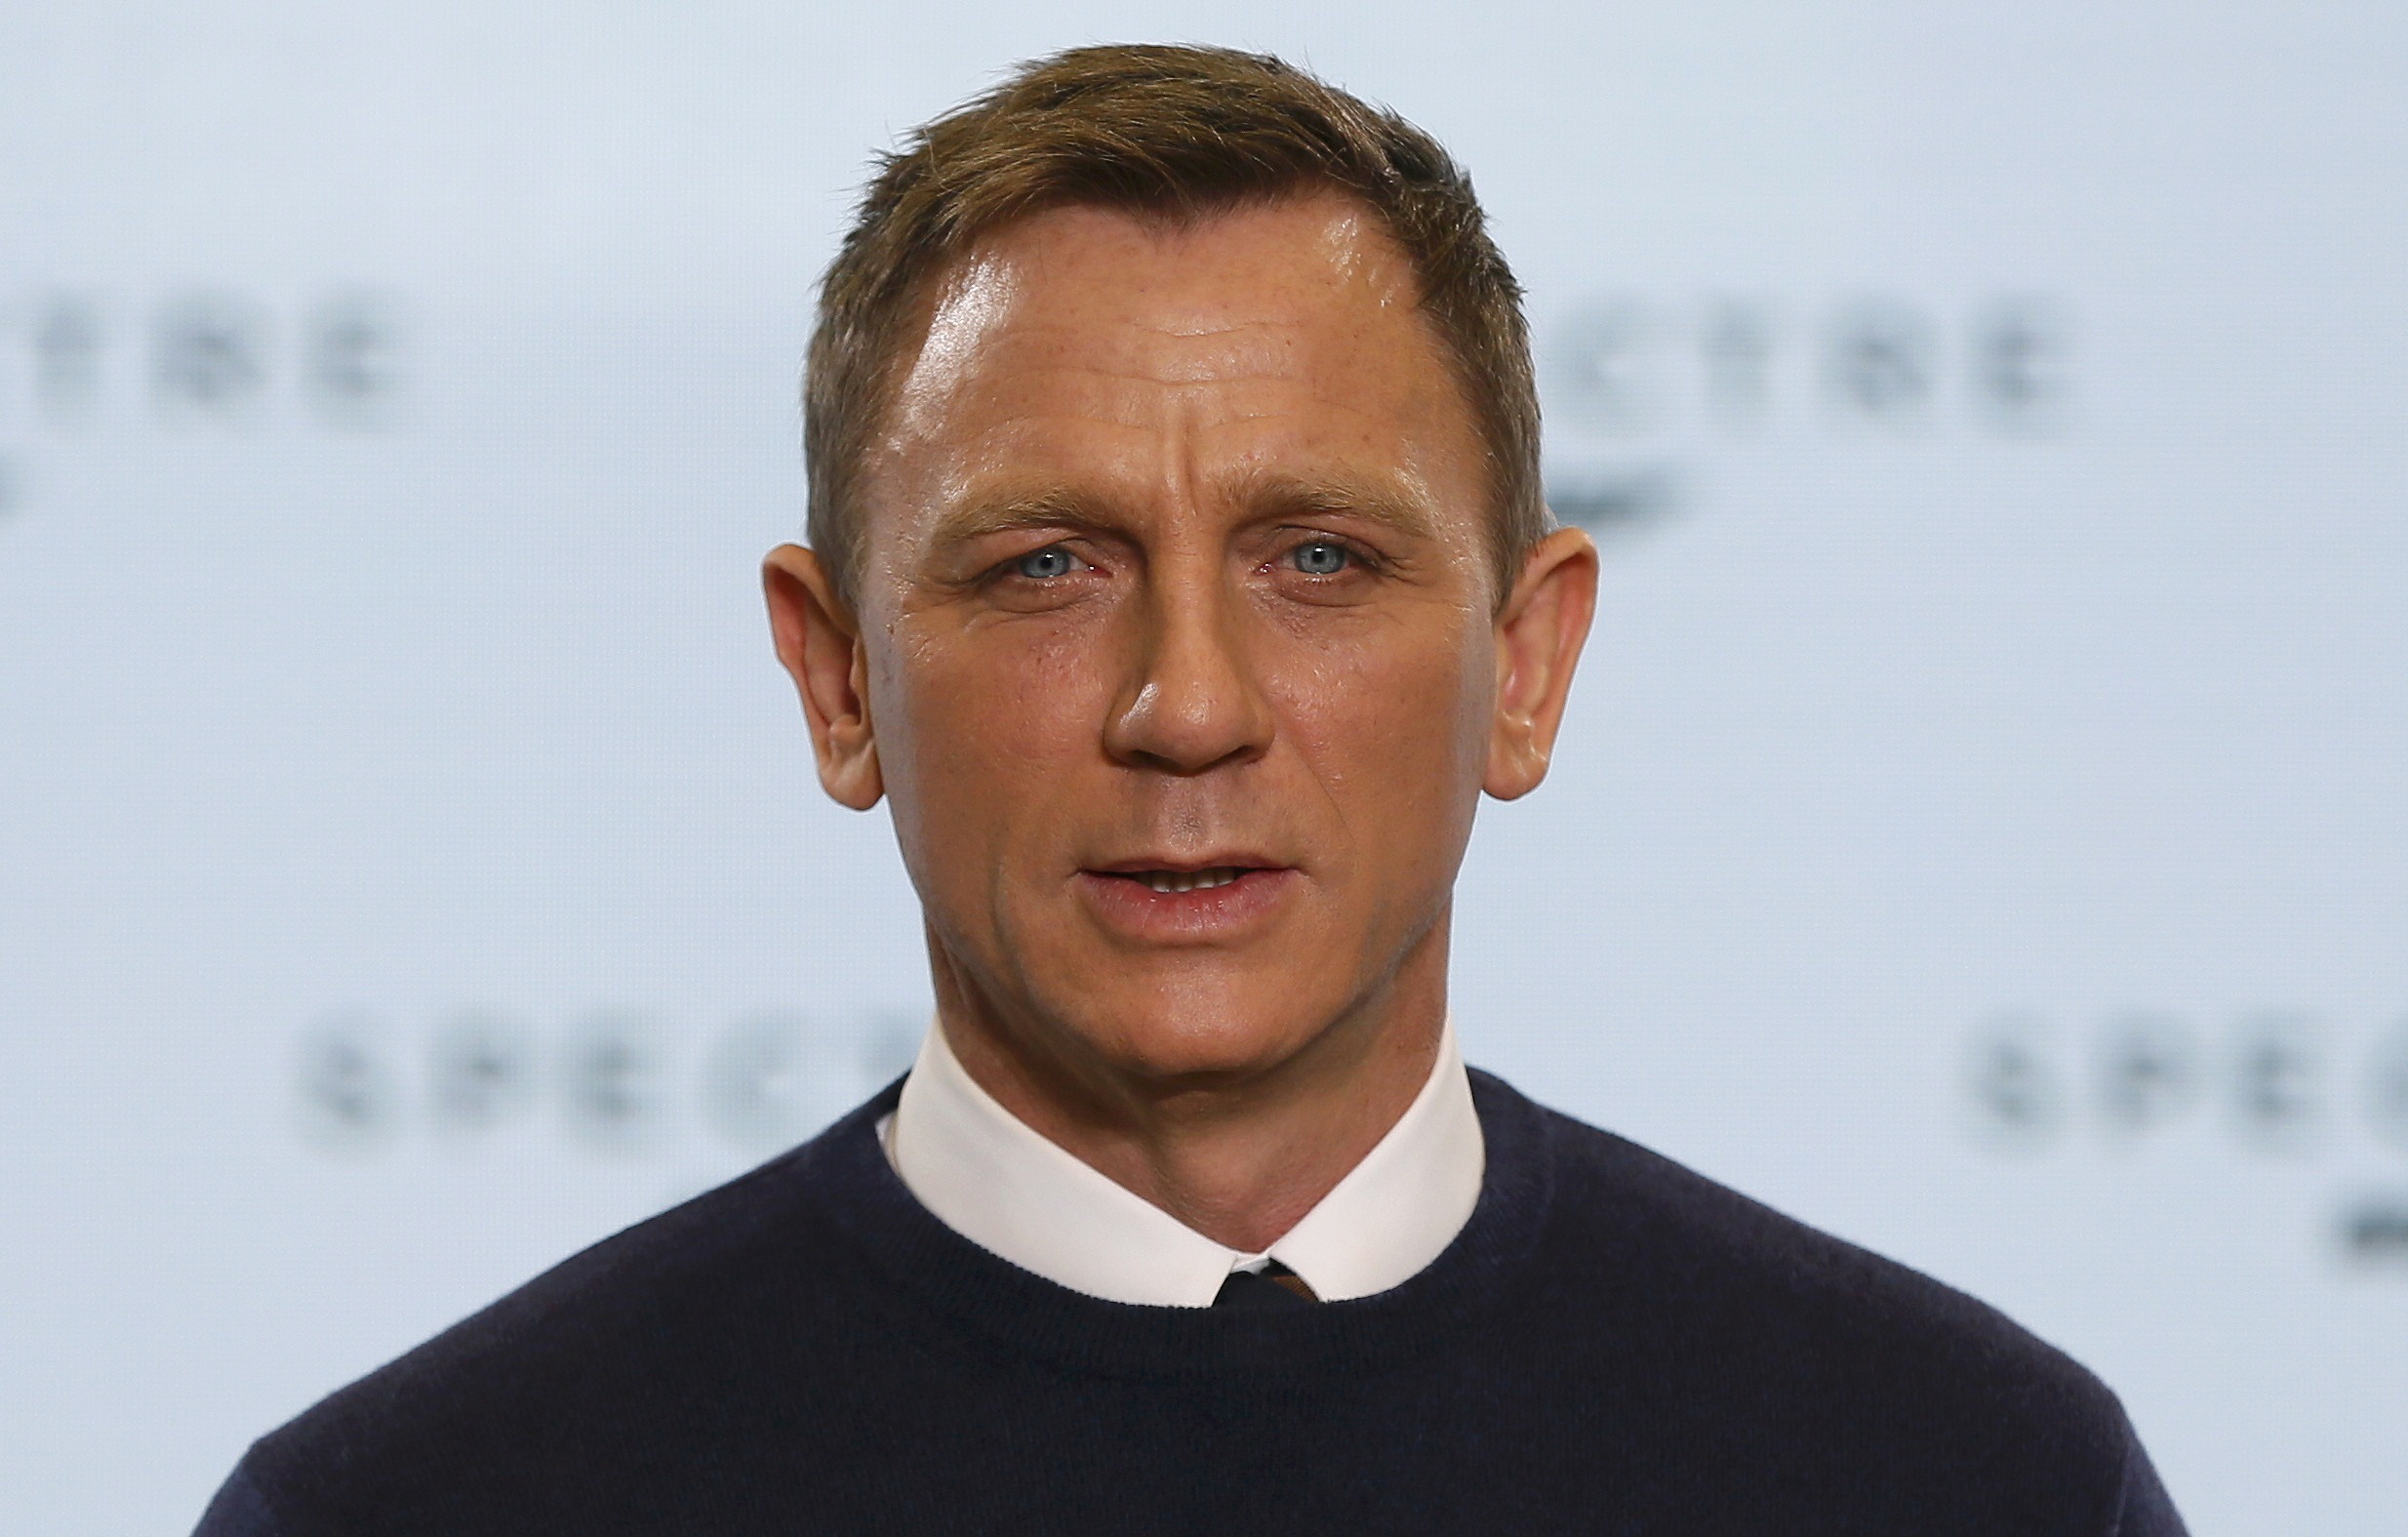 Daniel Craig volverá a interpretar a James Bond